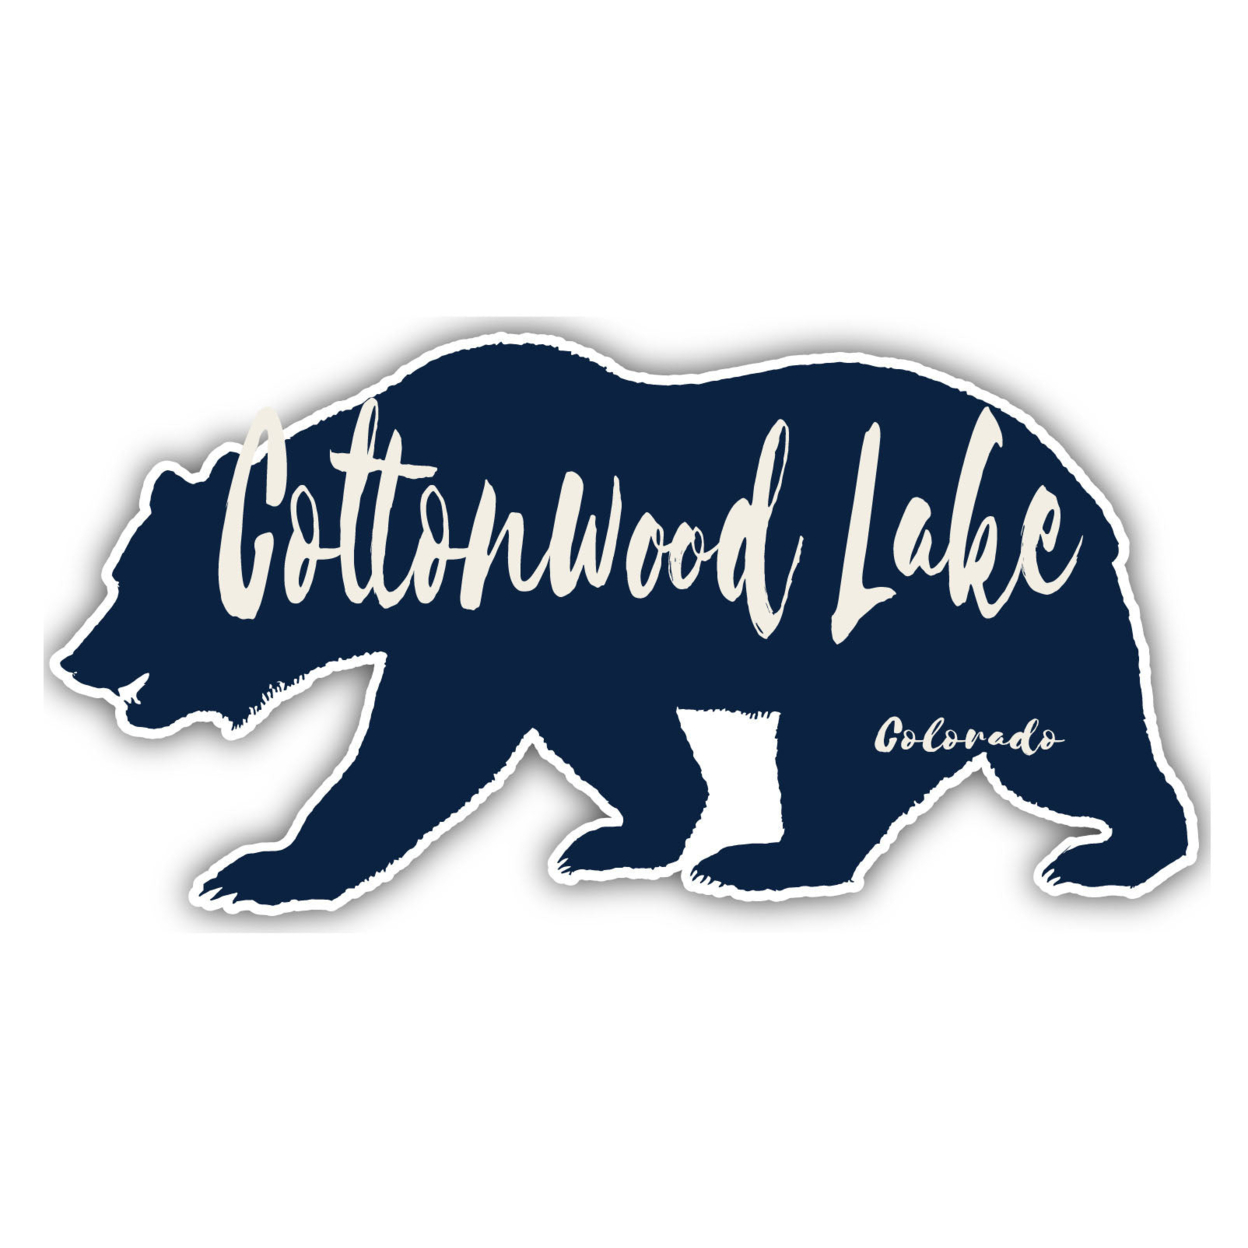 Cottonwood Lake Colorado Souvenir Decorative Stickers (Choose Theme And Size) - 4-Pack, 12-Inch, Bear